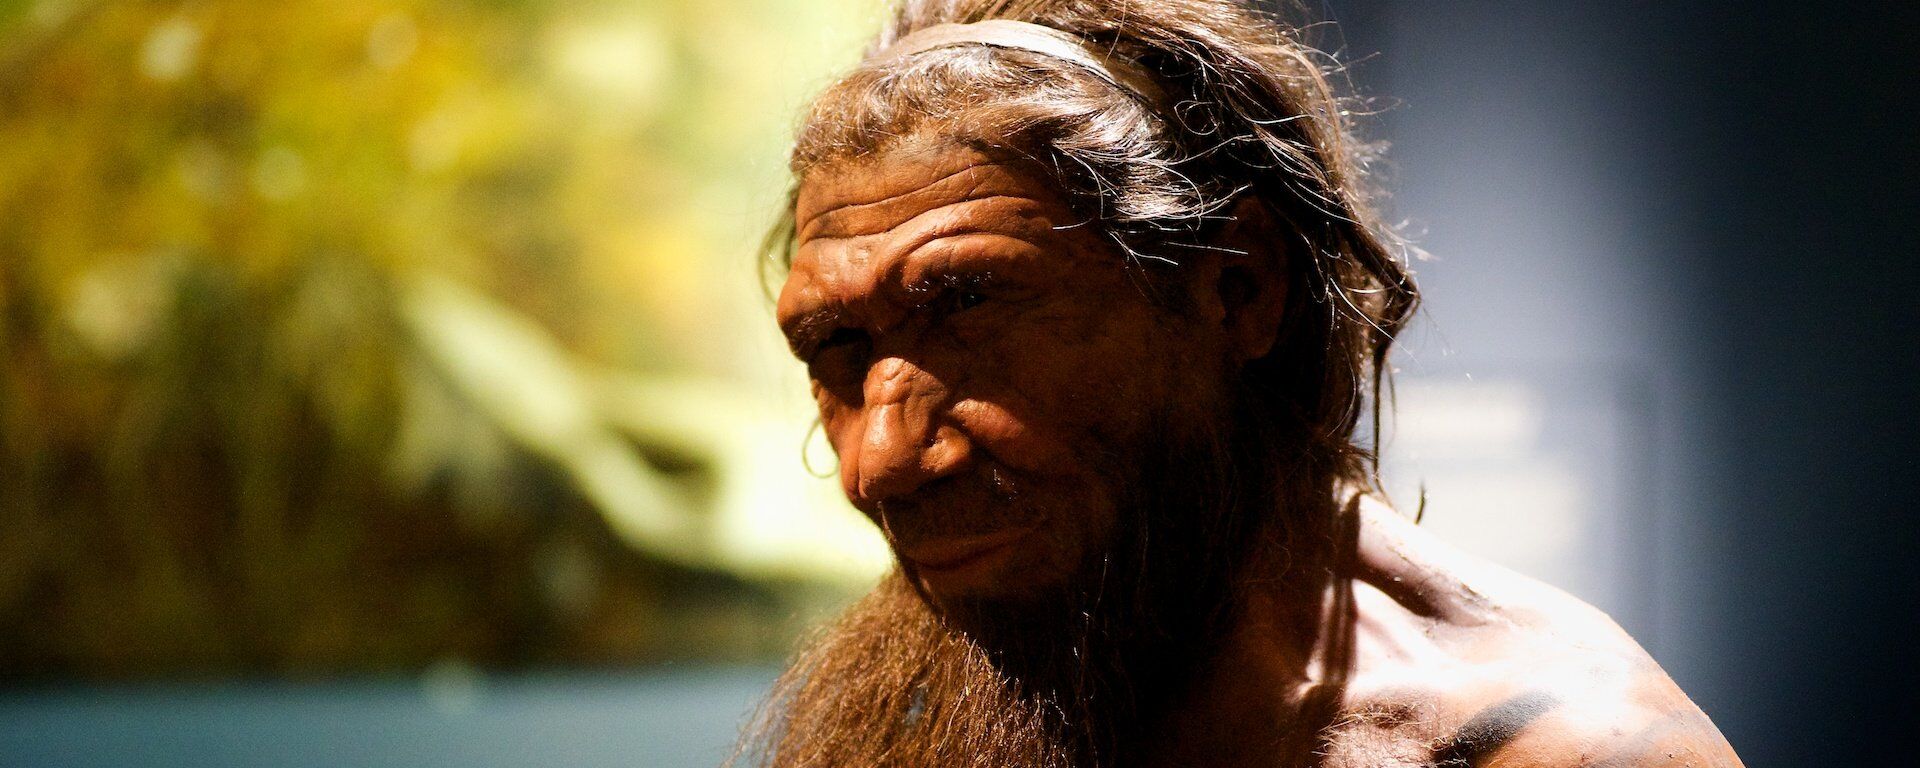 Un neandertal (imagen referencial) - Sputnik Mundo, 1920, 03.04.2020